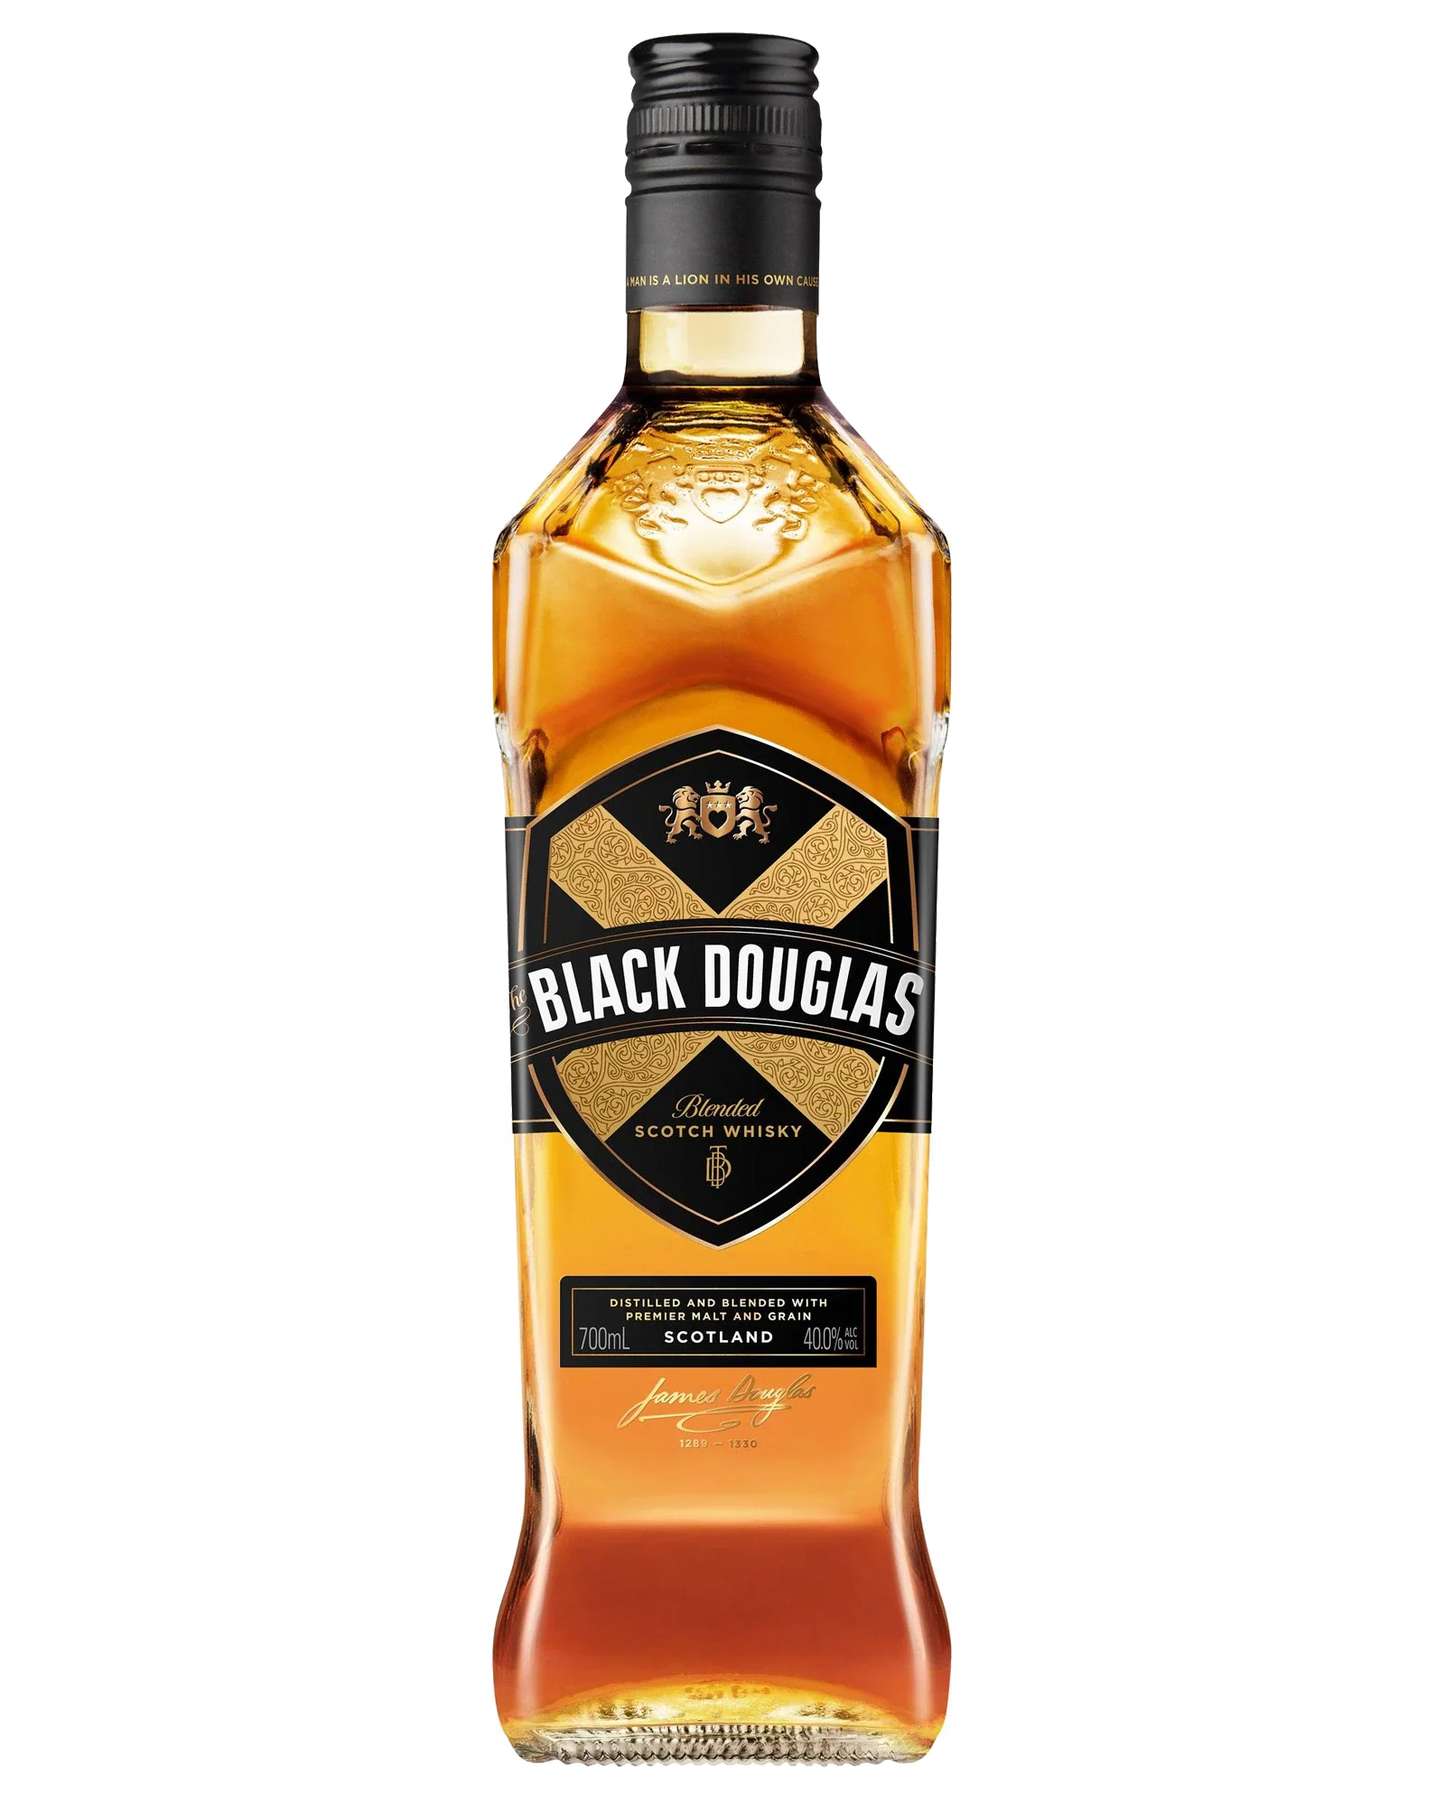 Black Douglas Scotch Whisky 700ml